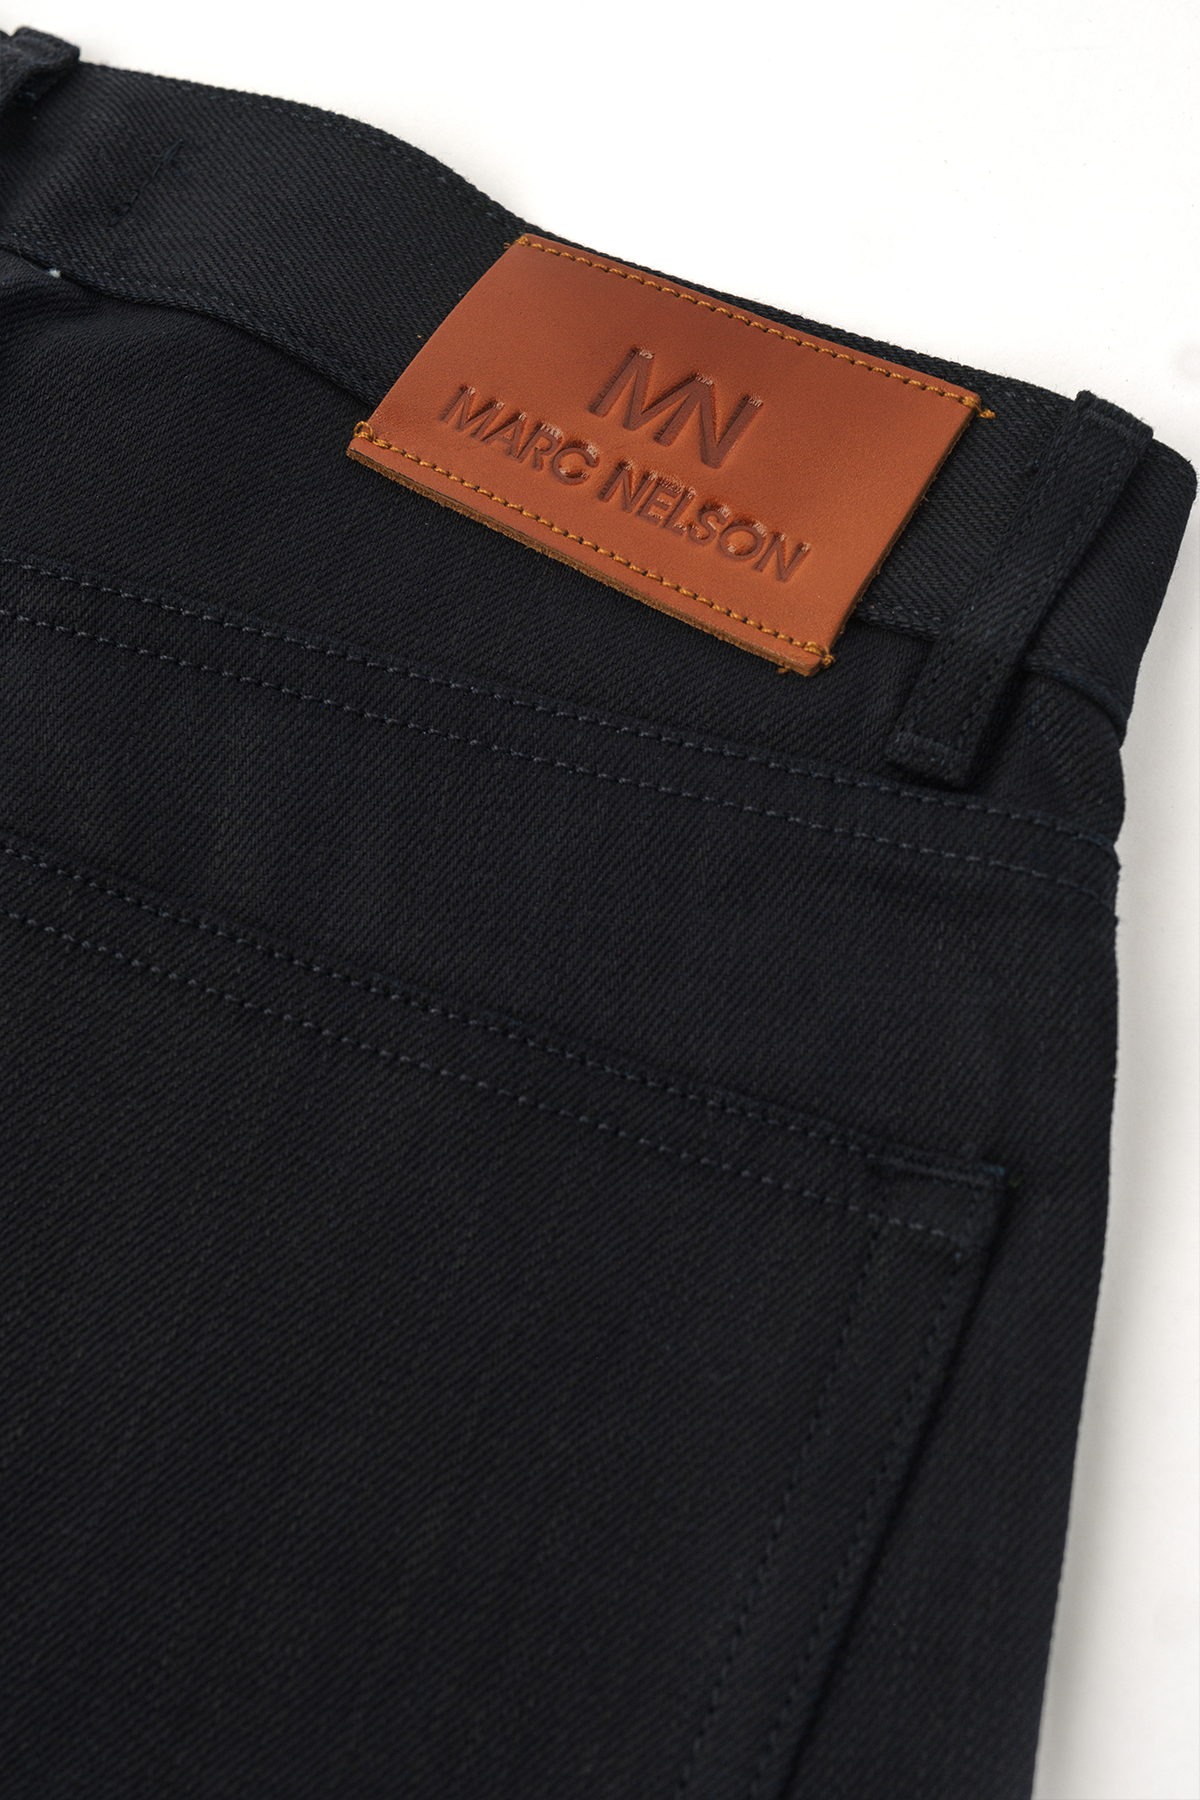 Close up photo of Kaihara blue stitch denim on white background showing the back pocket and back tab. 